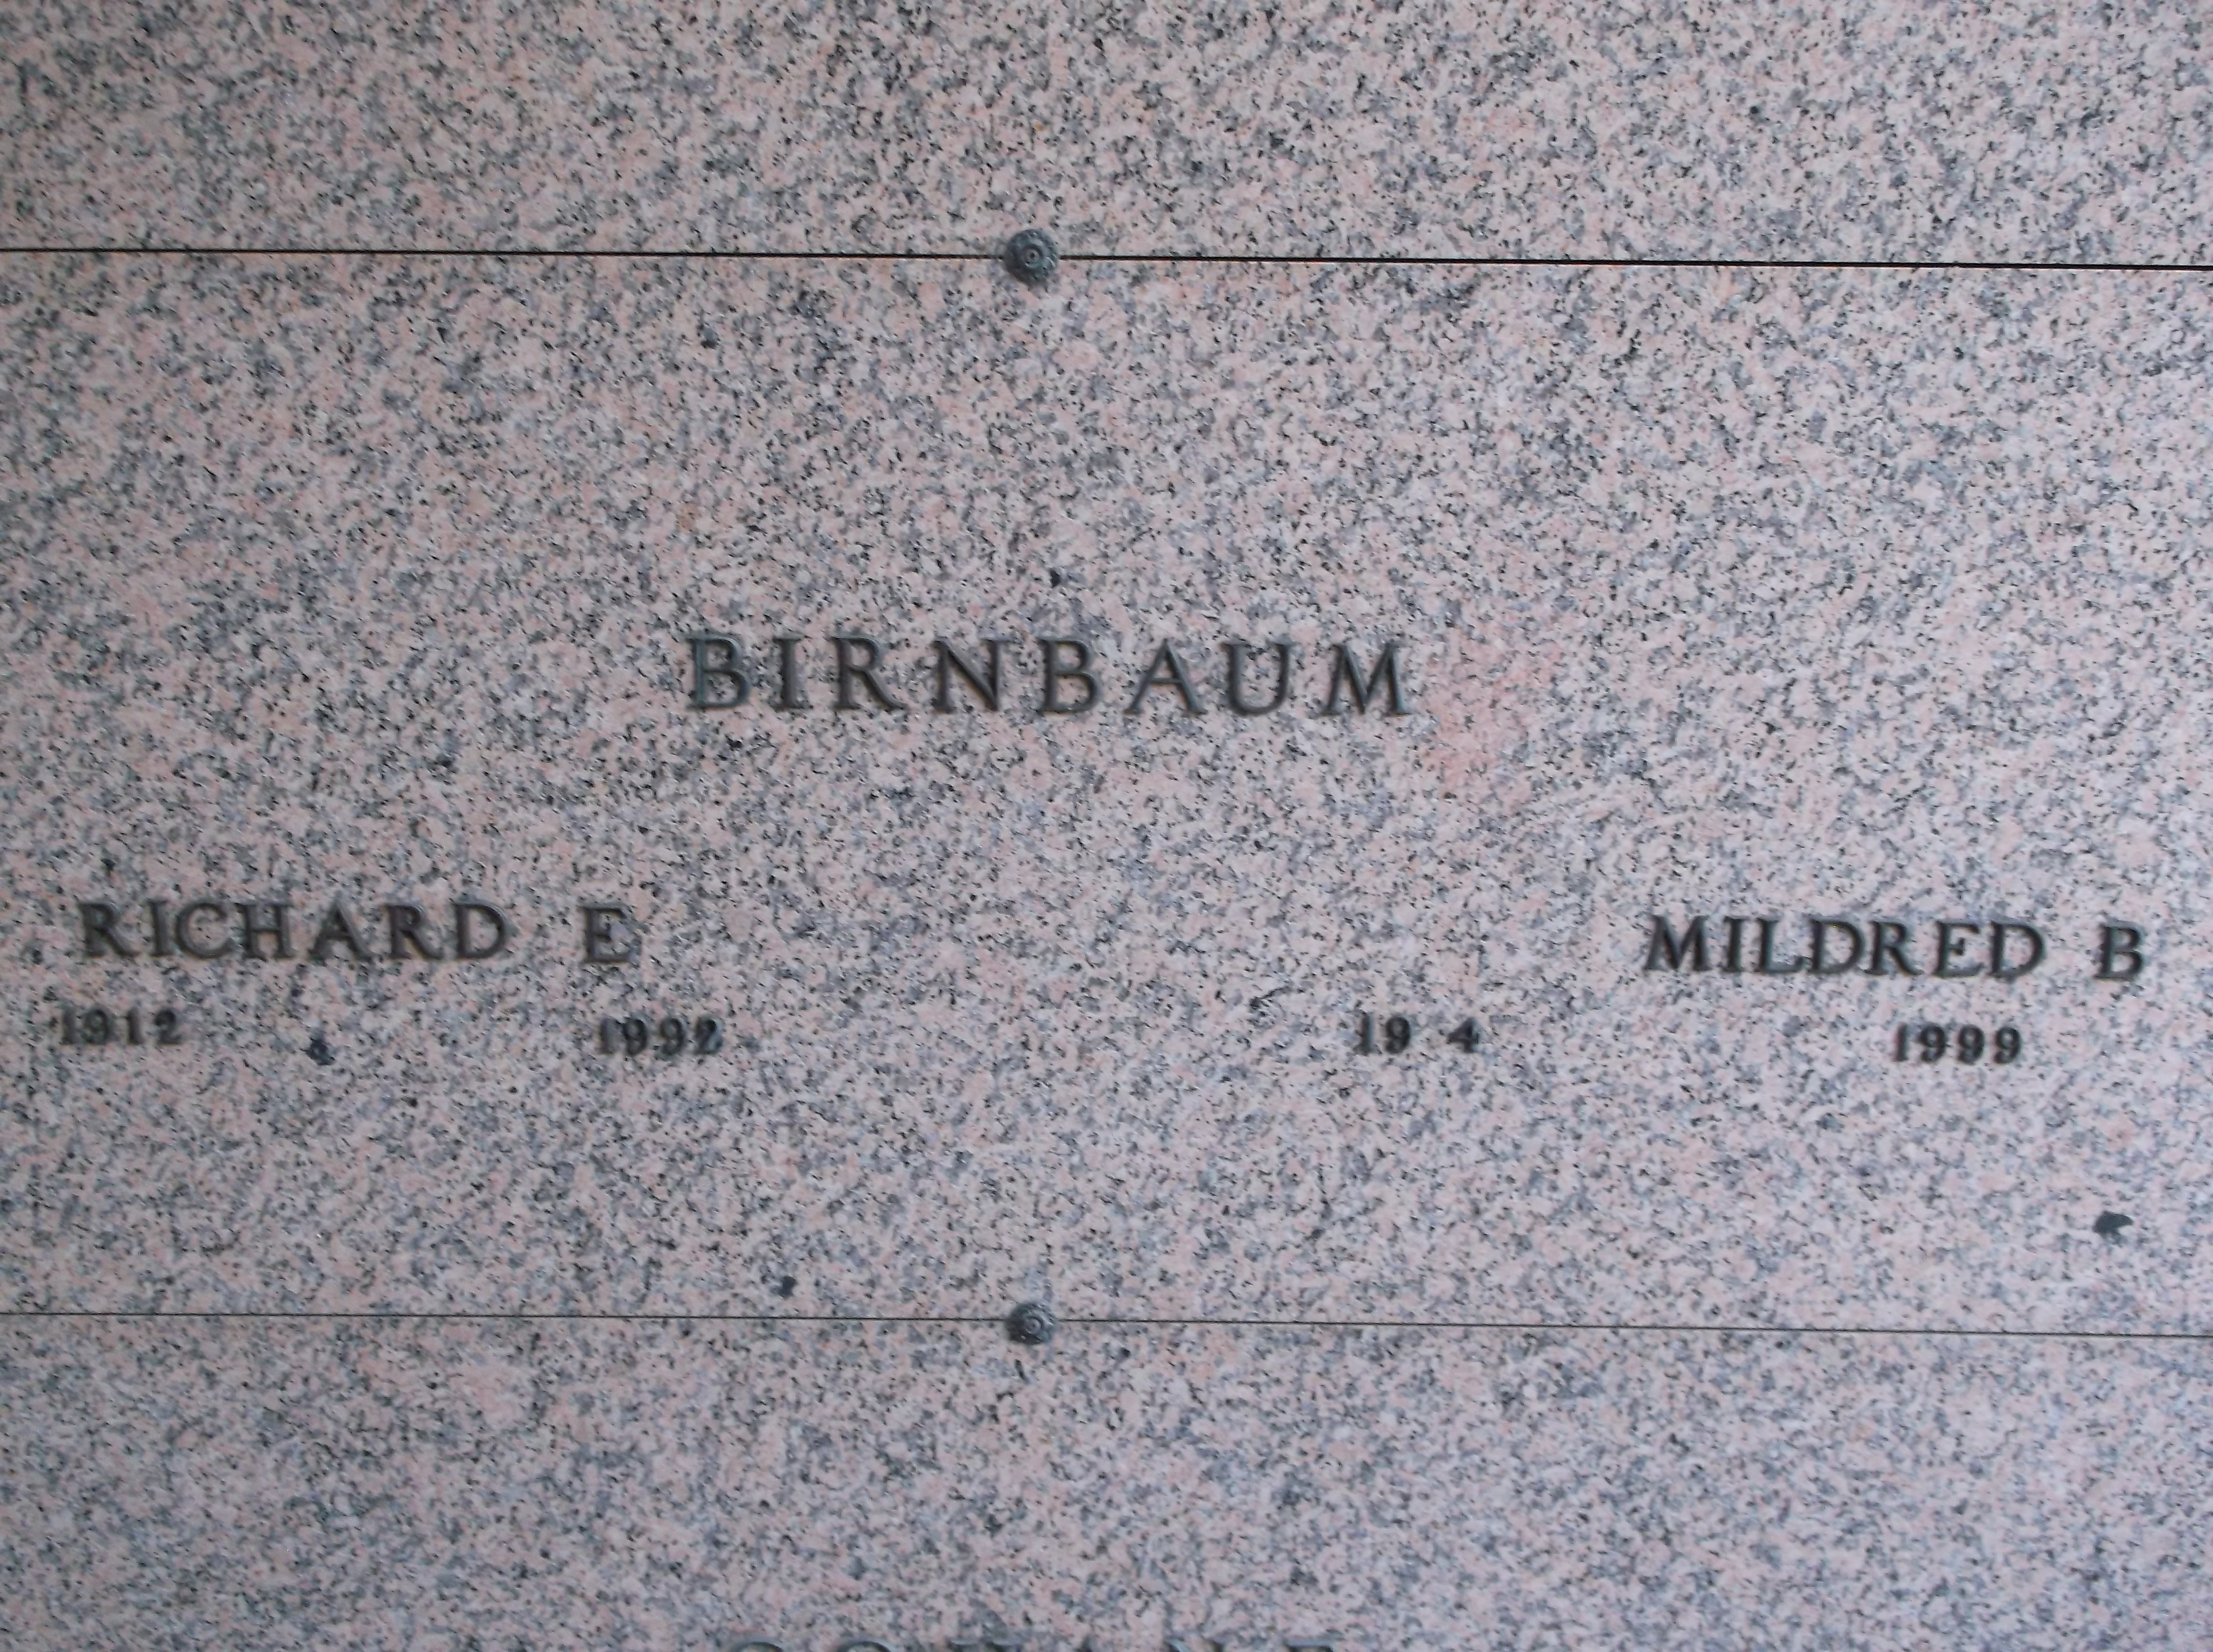 Mildred B Birnbaum